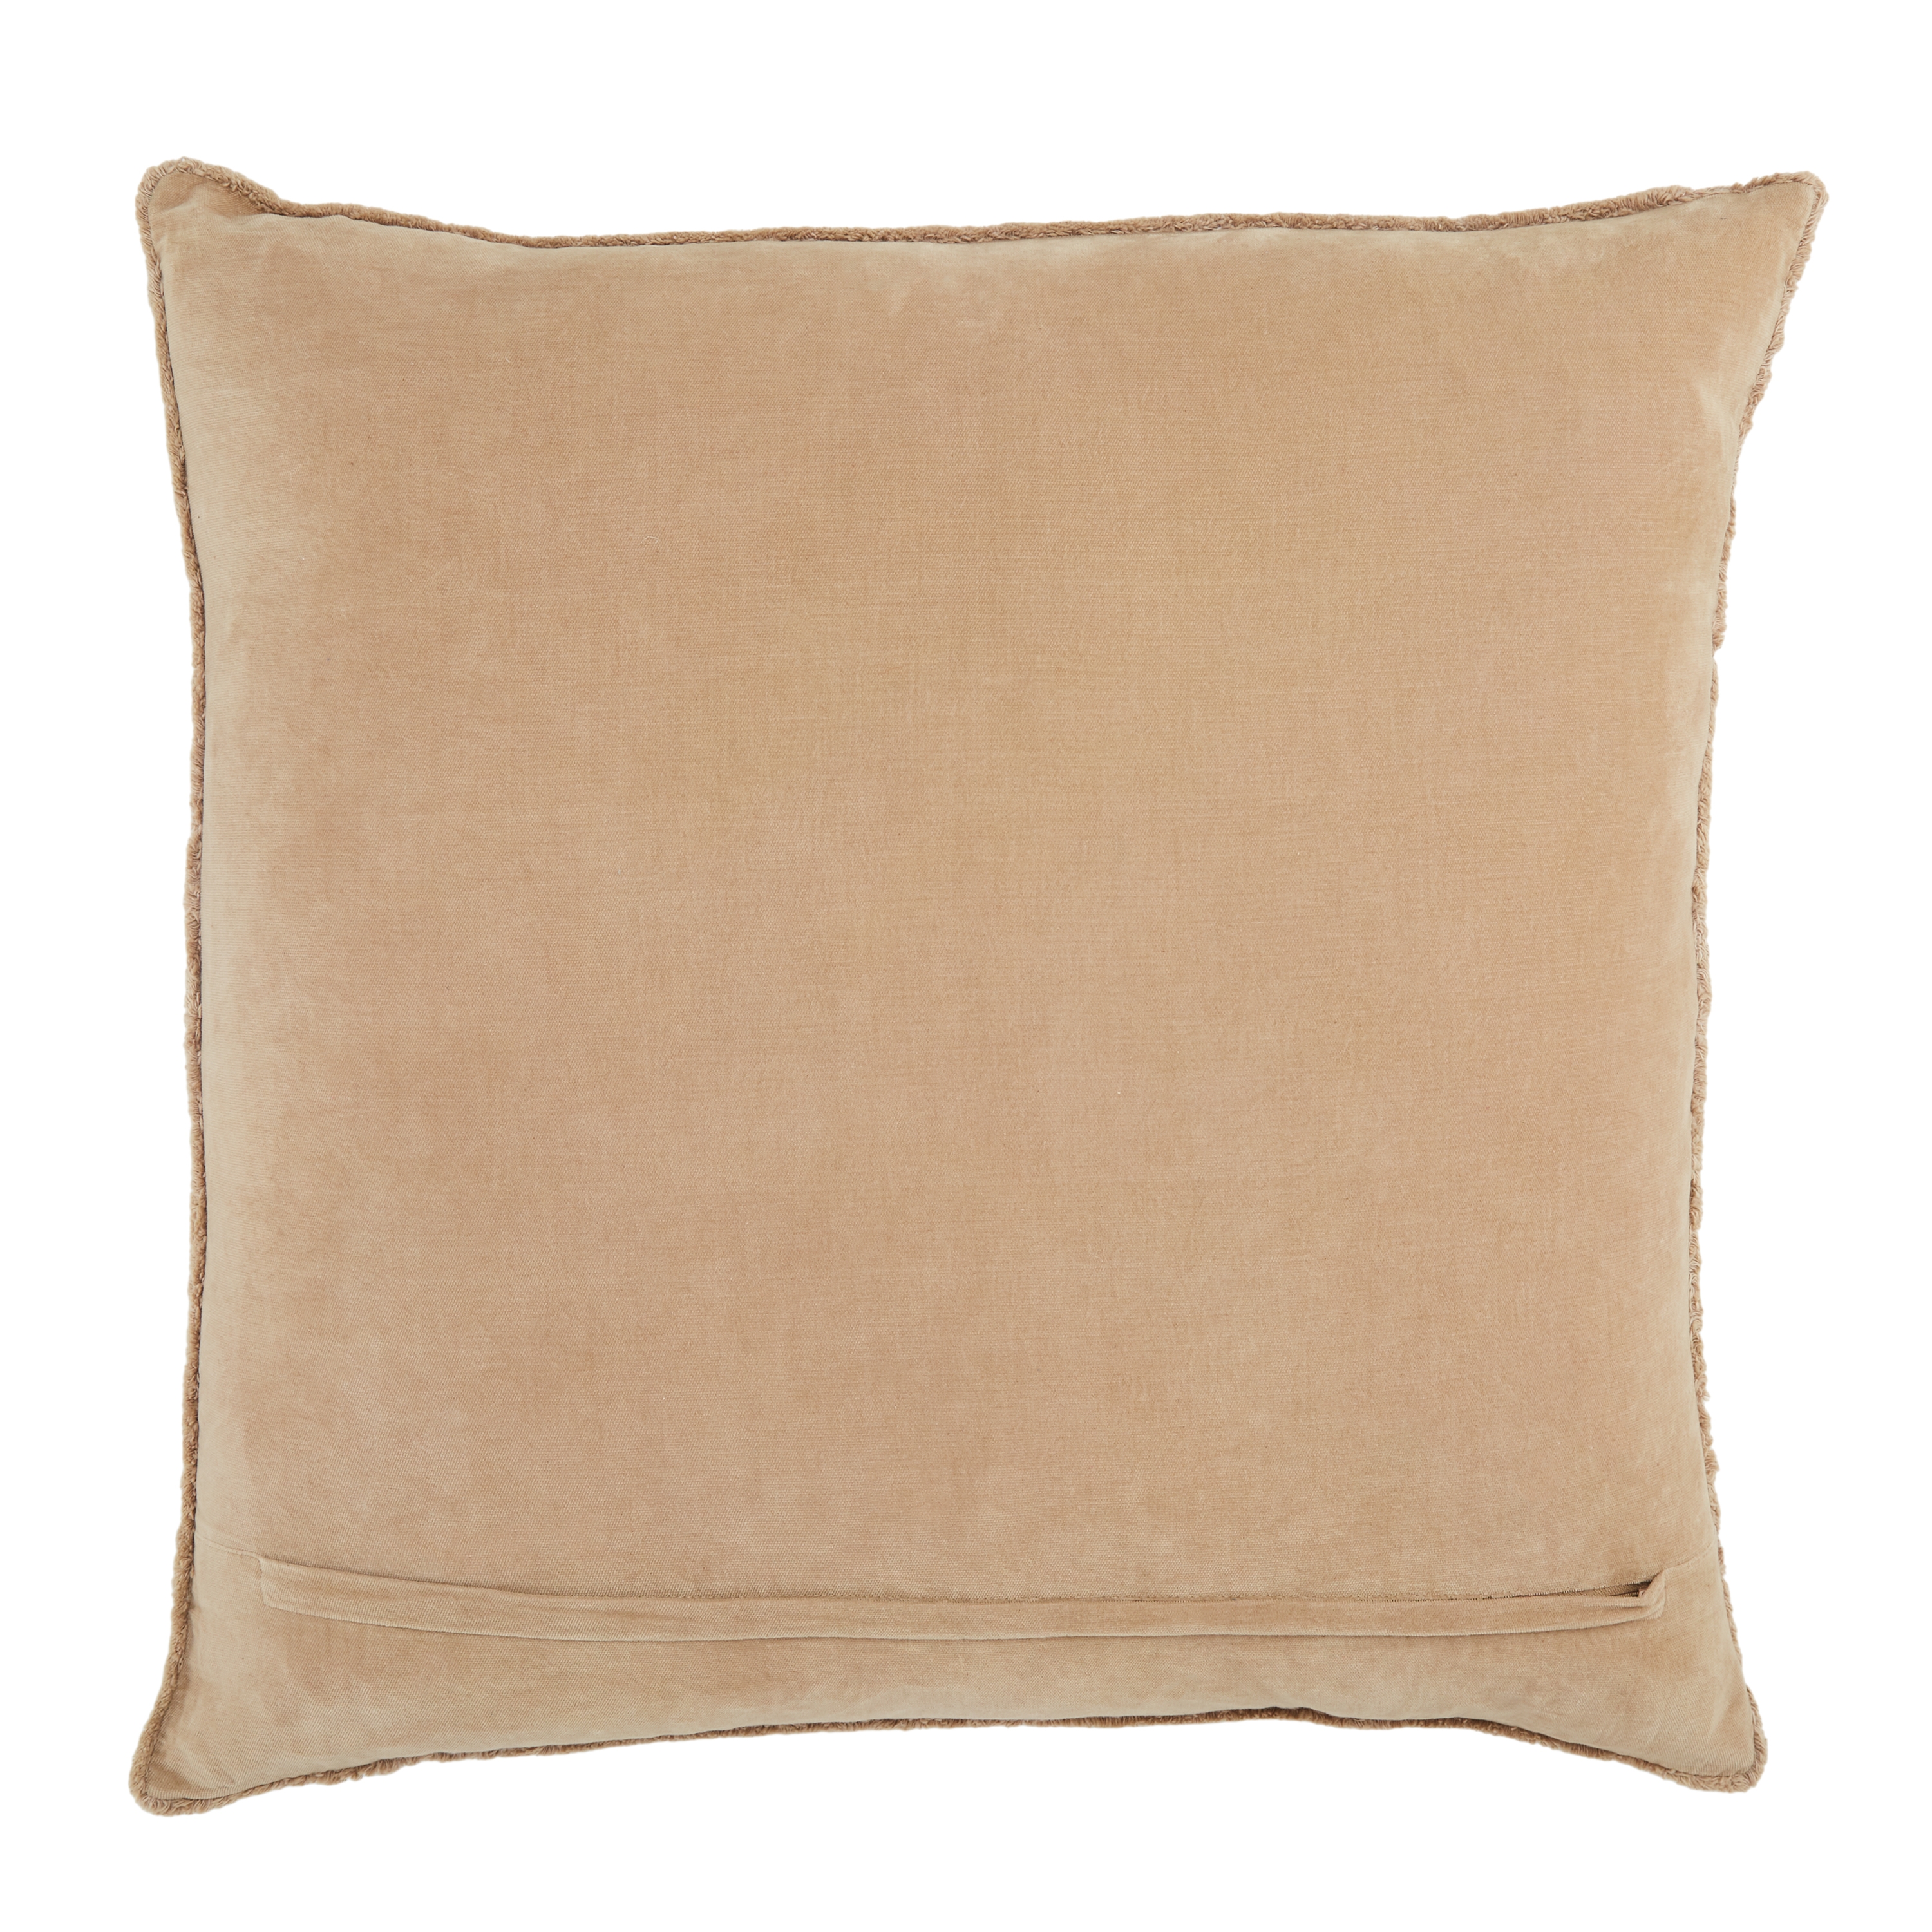 Design (US) Beige 26"X26" Pillow - Image 1